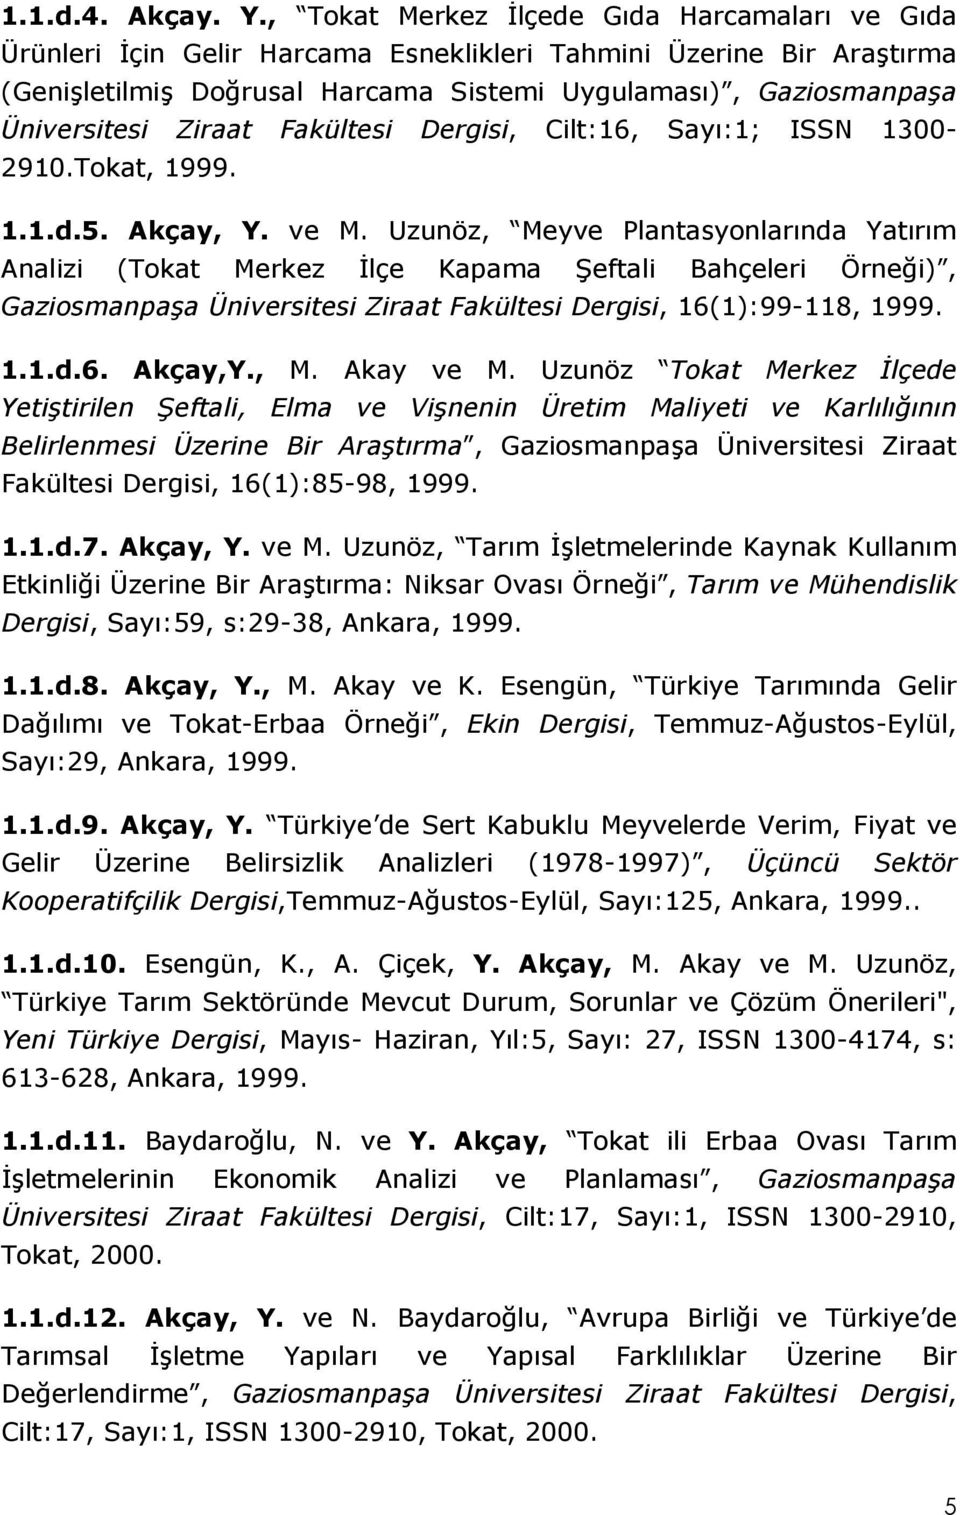 Ziraat Fakültesi Dergisi, Cilt:16, Sayı:1; ISSN 1300-2910.Tokat, 1999. 1.1.d.5. Akçay, Y. ve M.